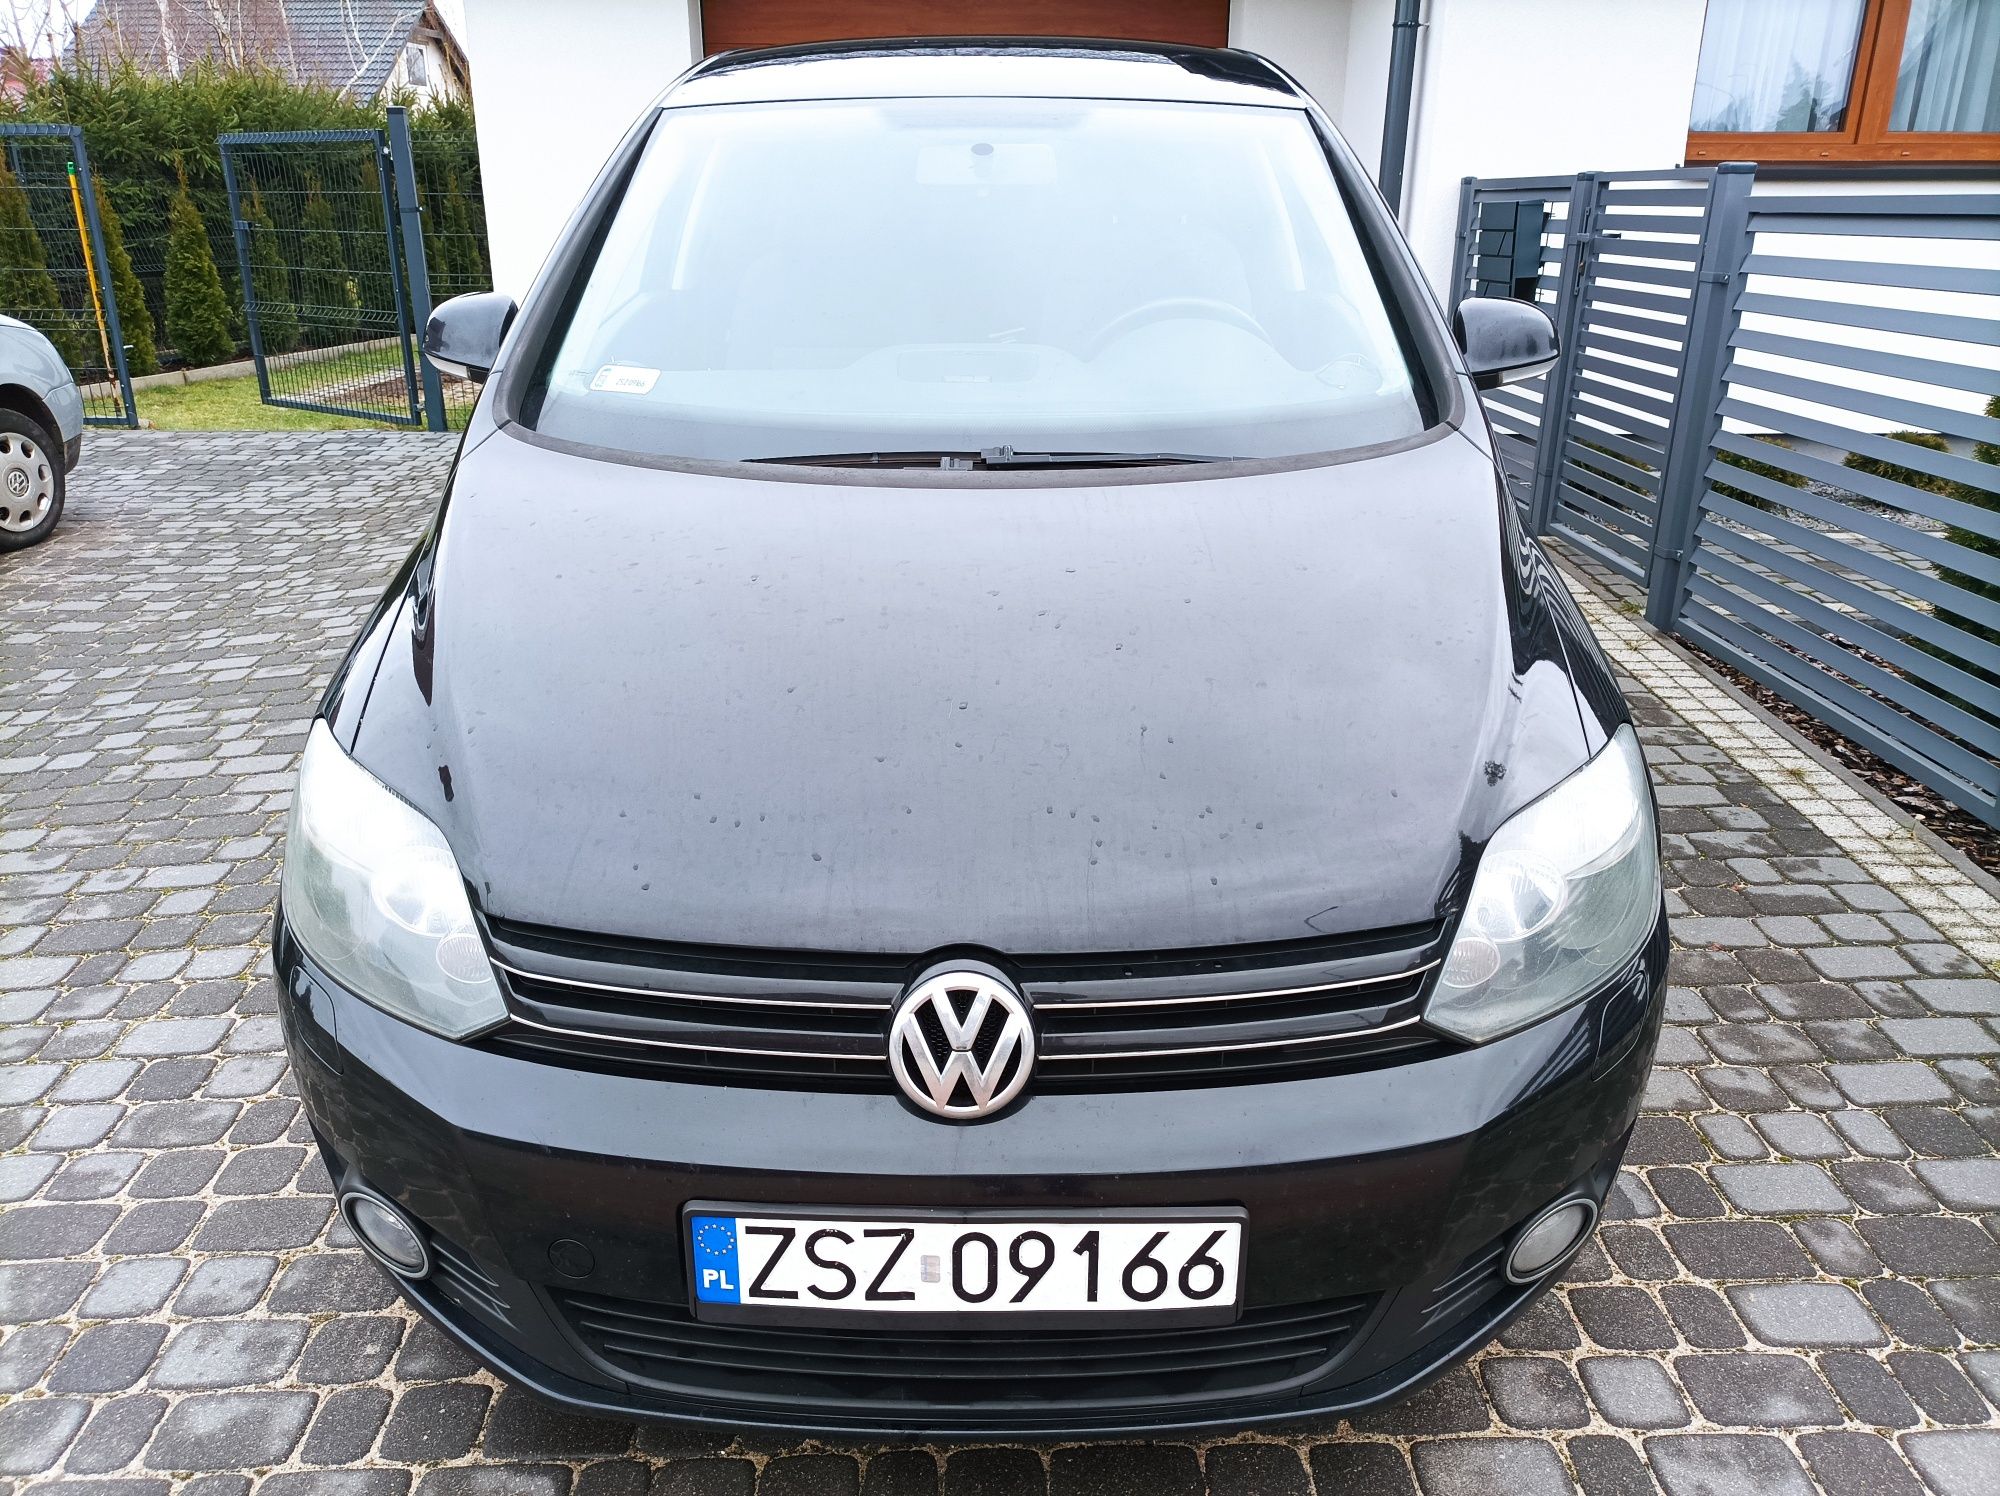 VW golf VI plus 1.6TDI - 2010r -bezwypadkowy